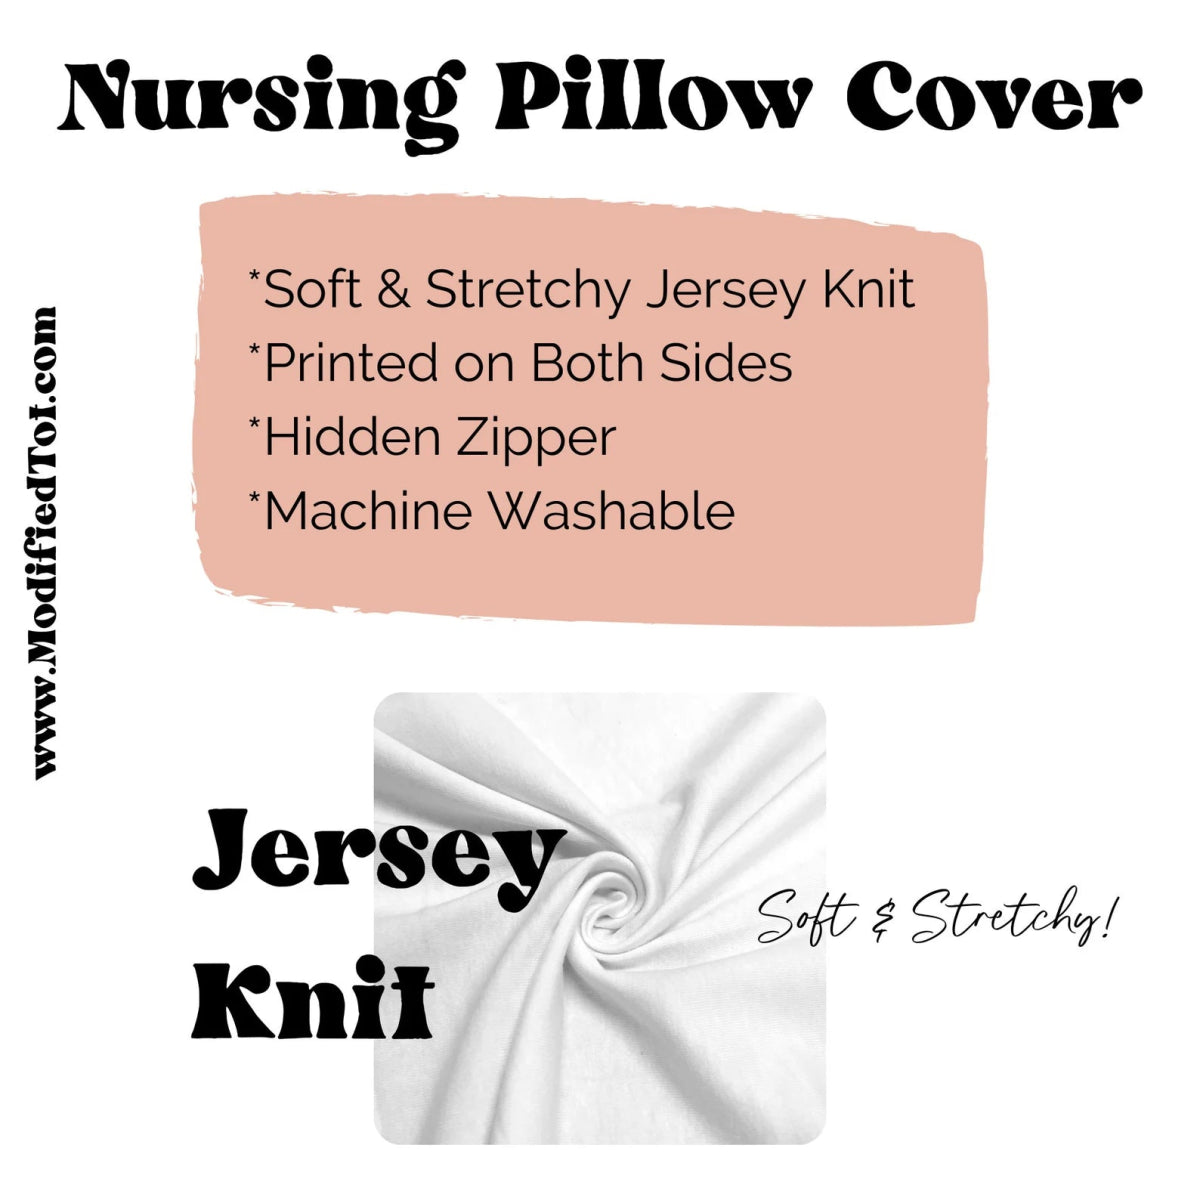 Whisper Floral Nursing Pillow Cover - gender_girl, Theme_Floral, Whisper Floral